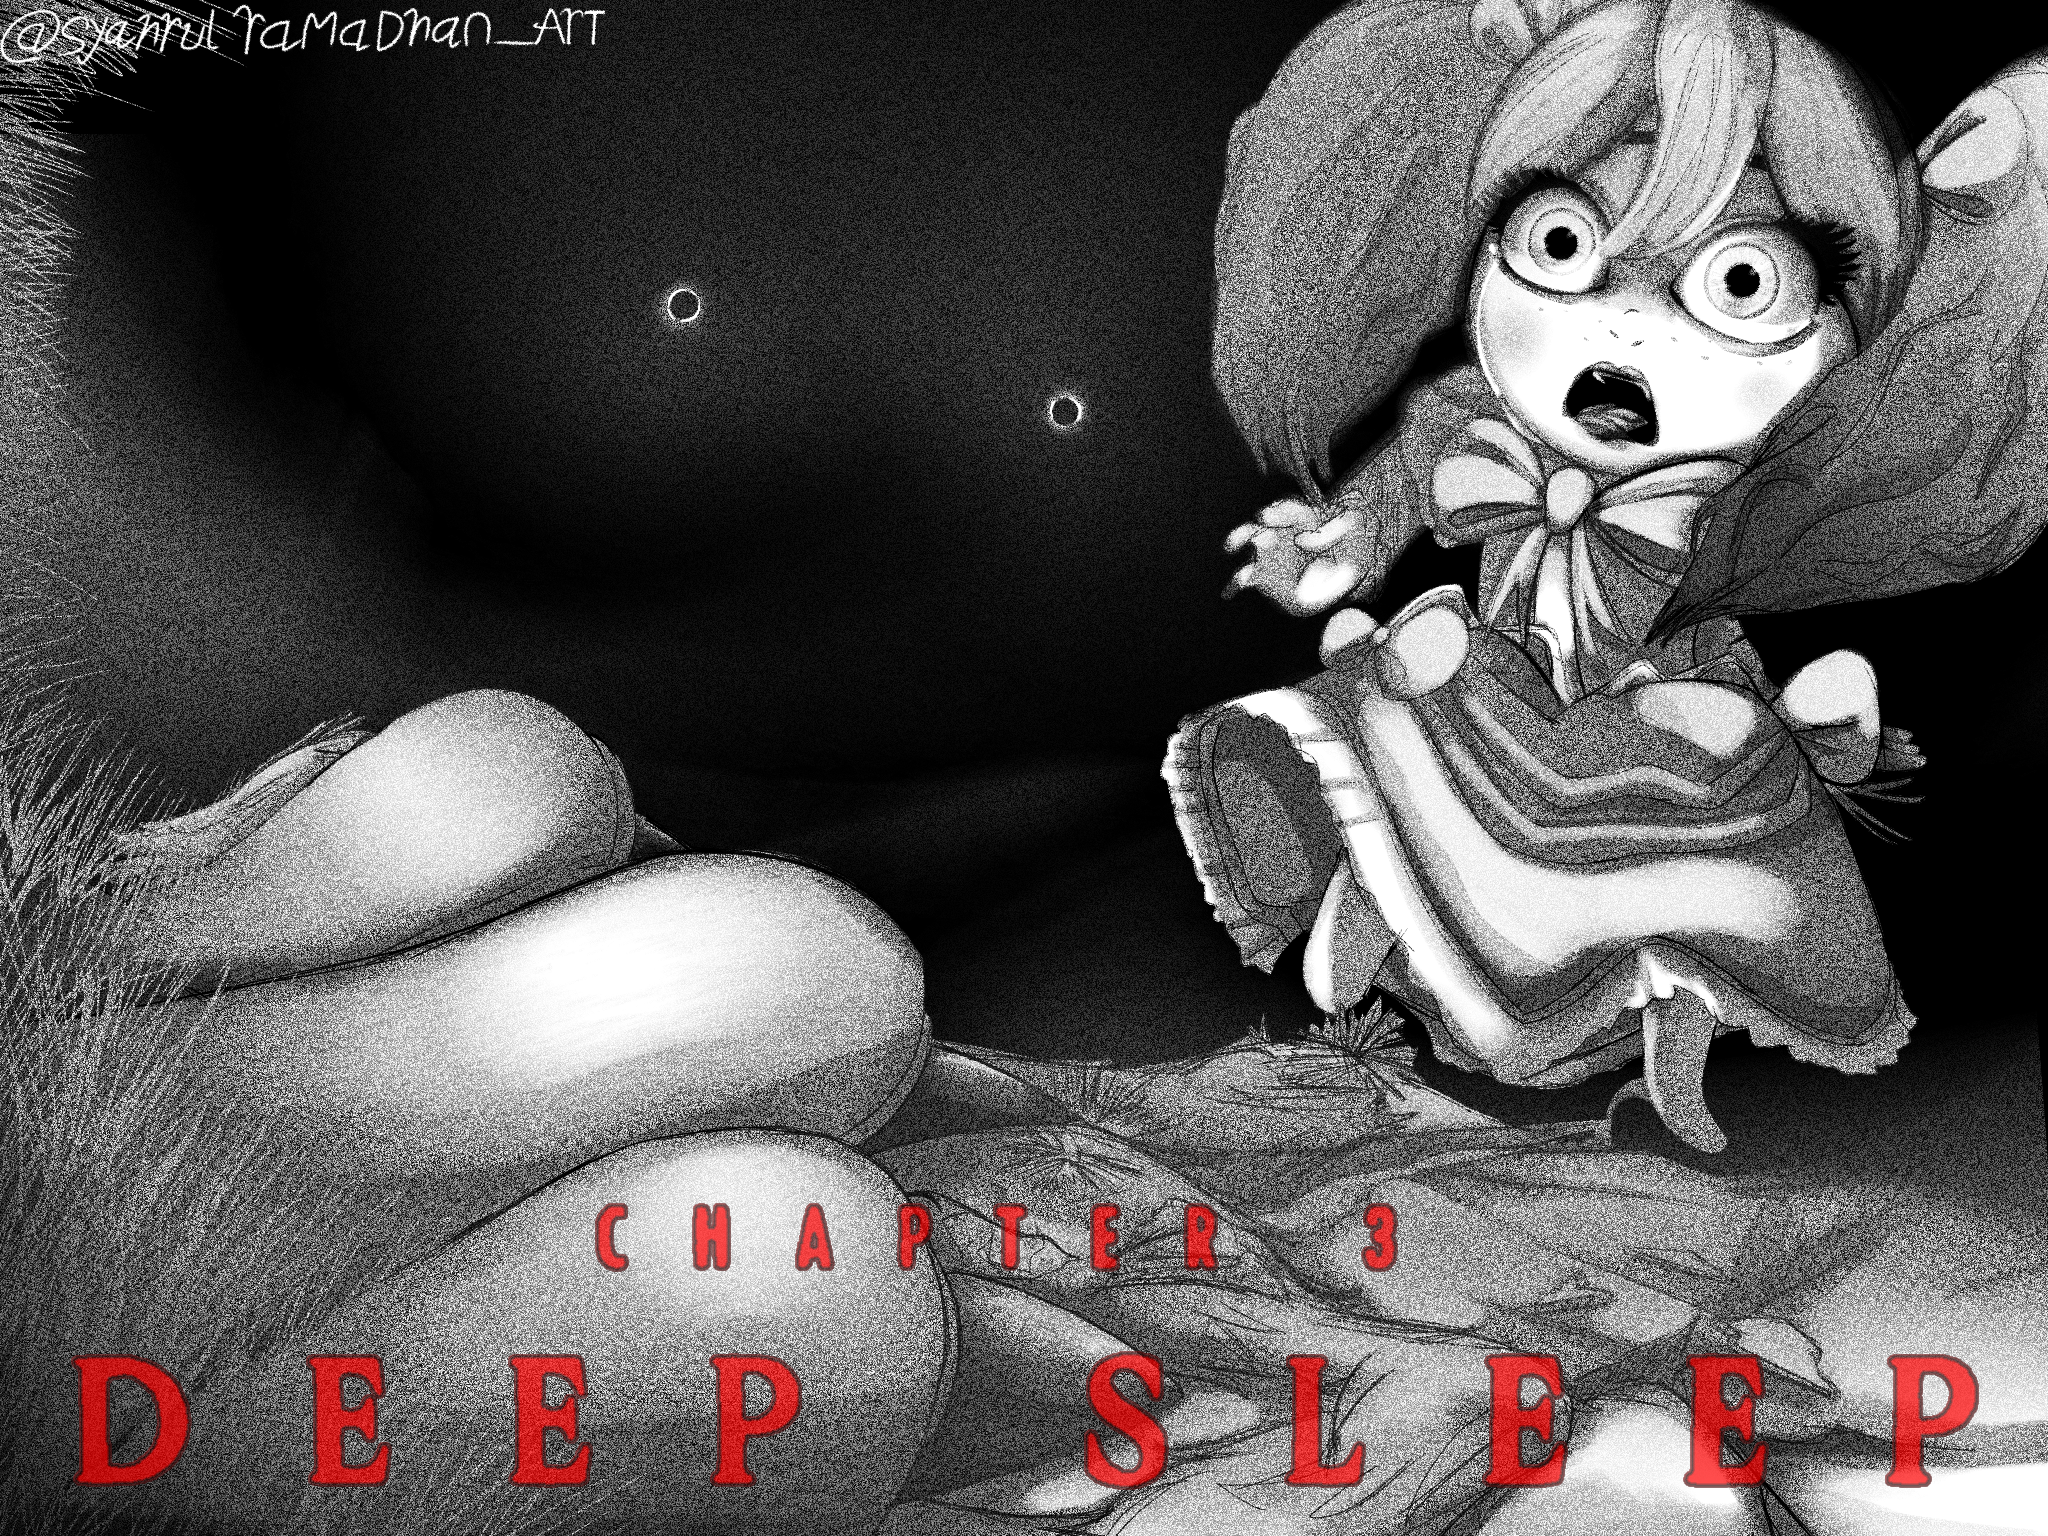 Poppy playtime chapter 3 DEEP SLEEP! by SyahrulRamadhank02 on DeviantArt